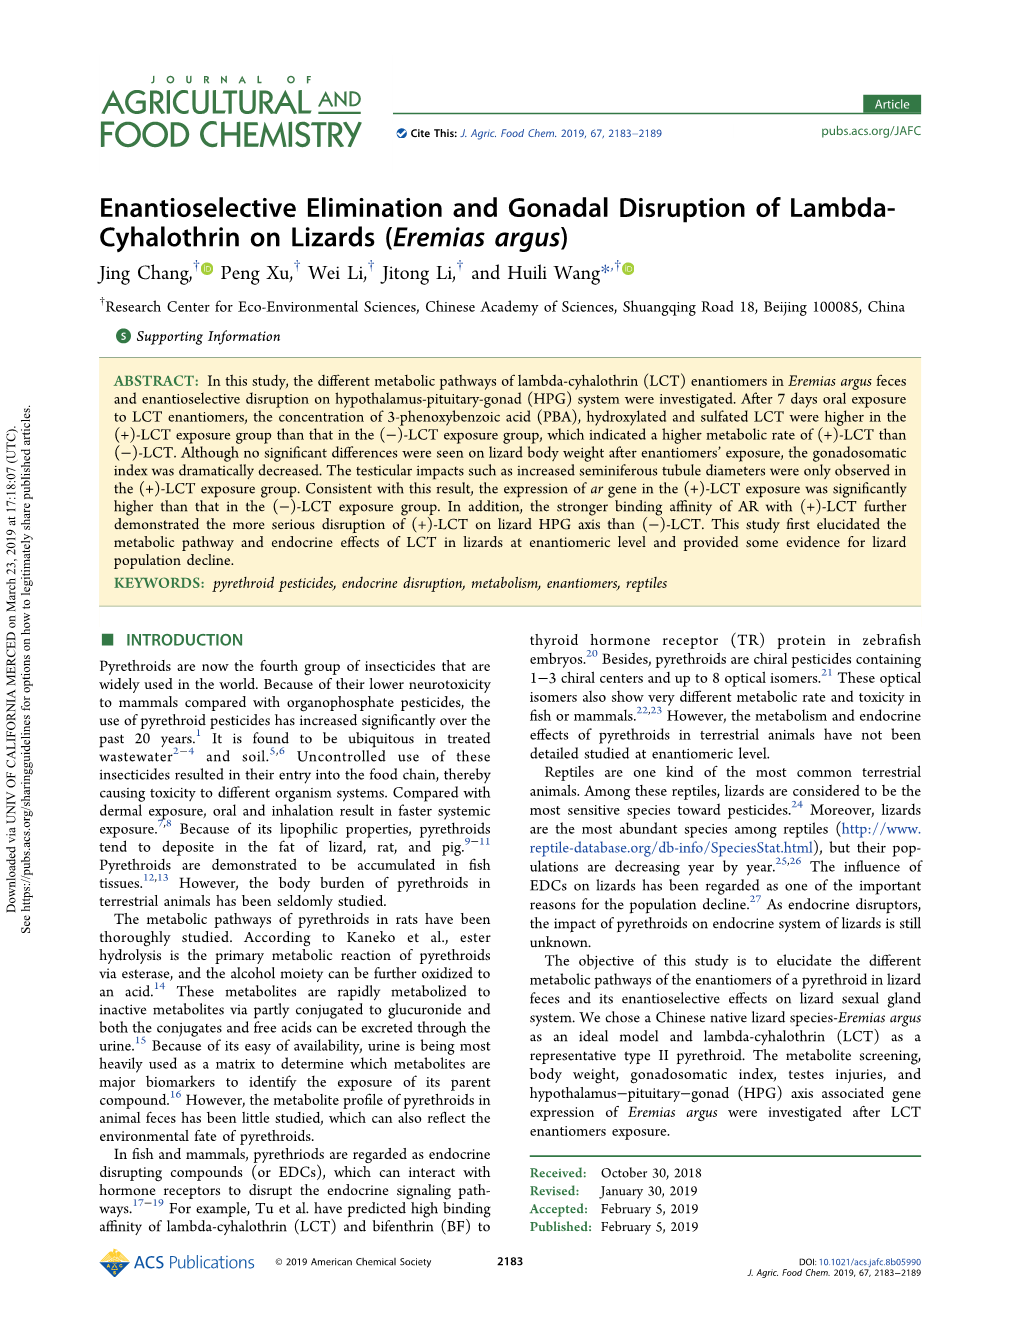 Enantioselective Elimination and Gonadal Disruption of Lambda